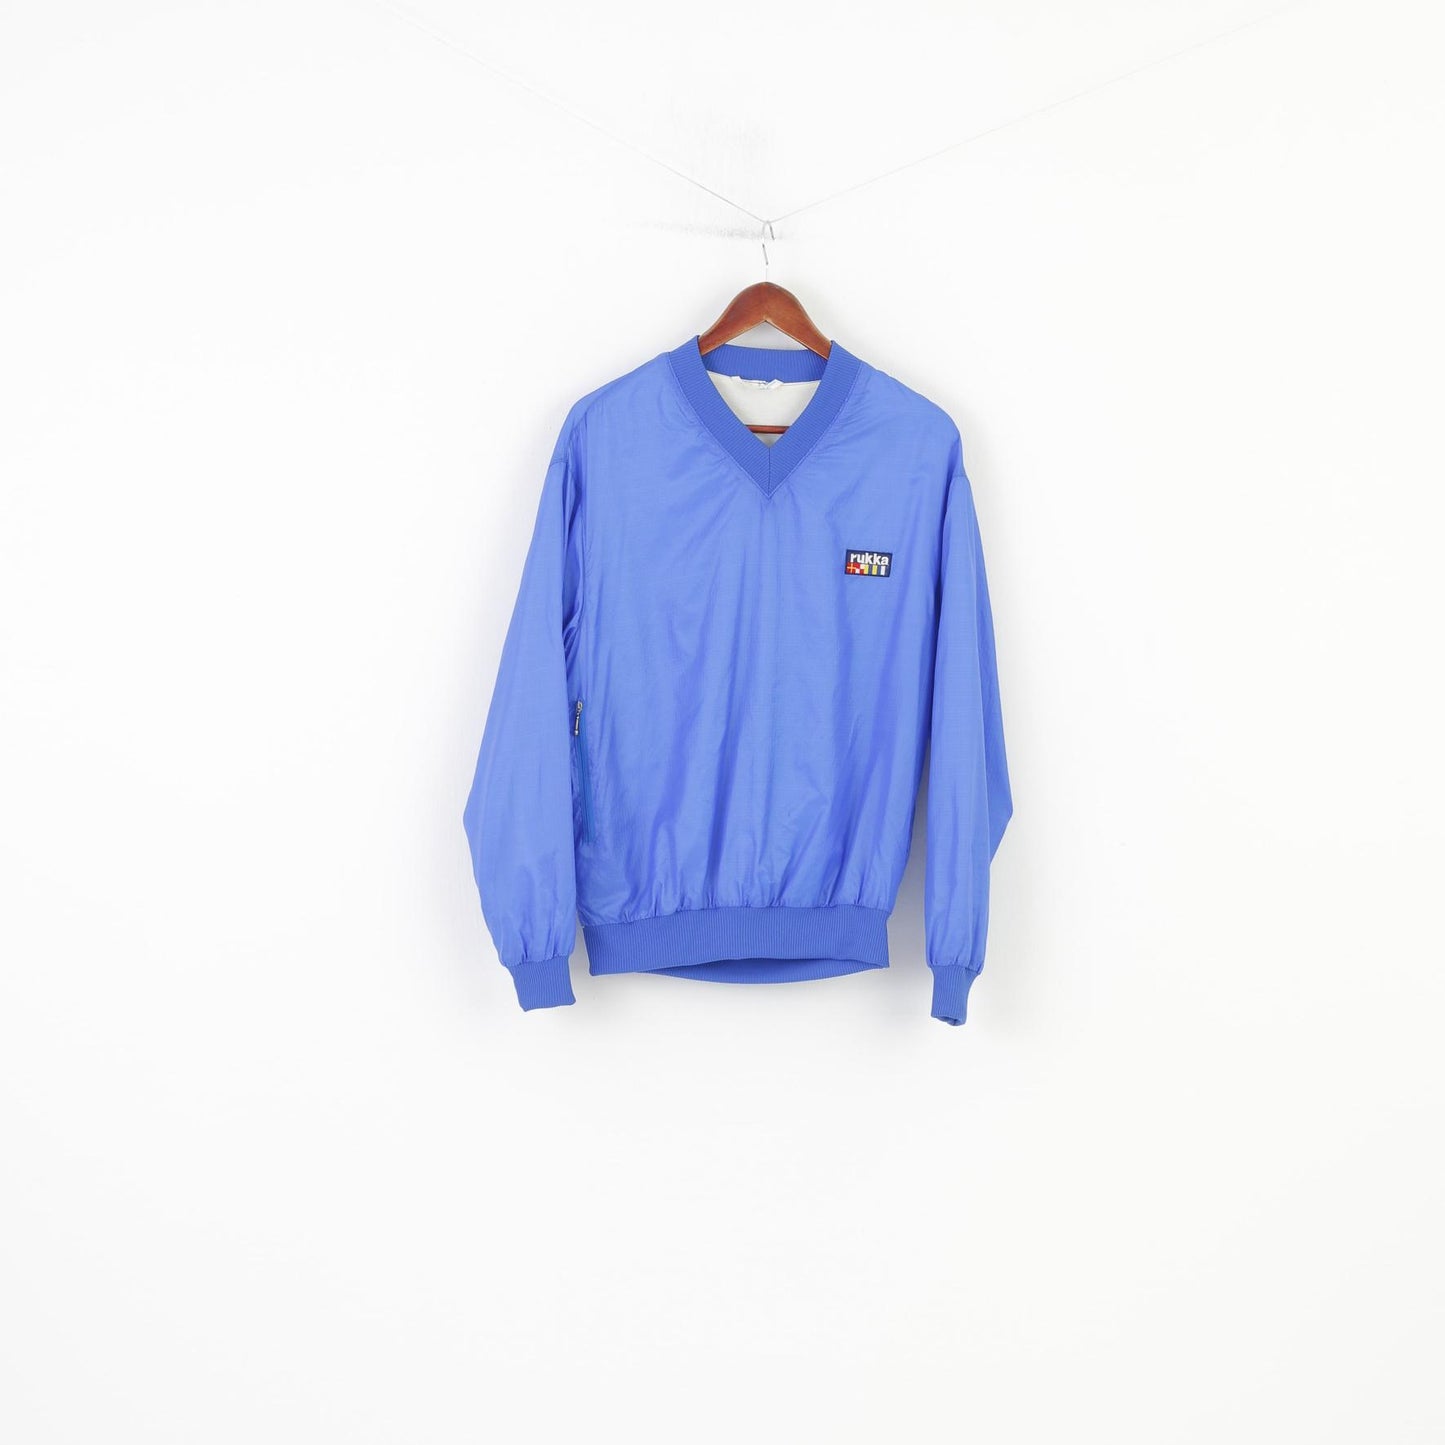 Rukka Men S Shirt Blue V Neck Sport Longsleeve Shiny Vintage Top